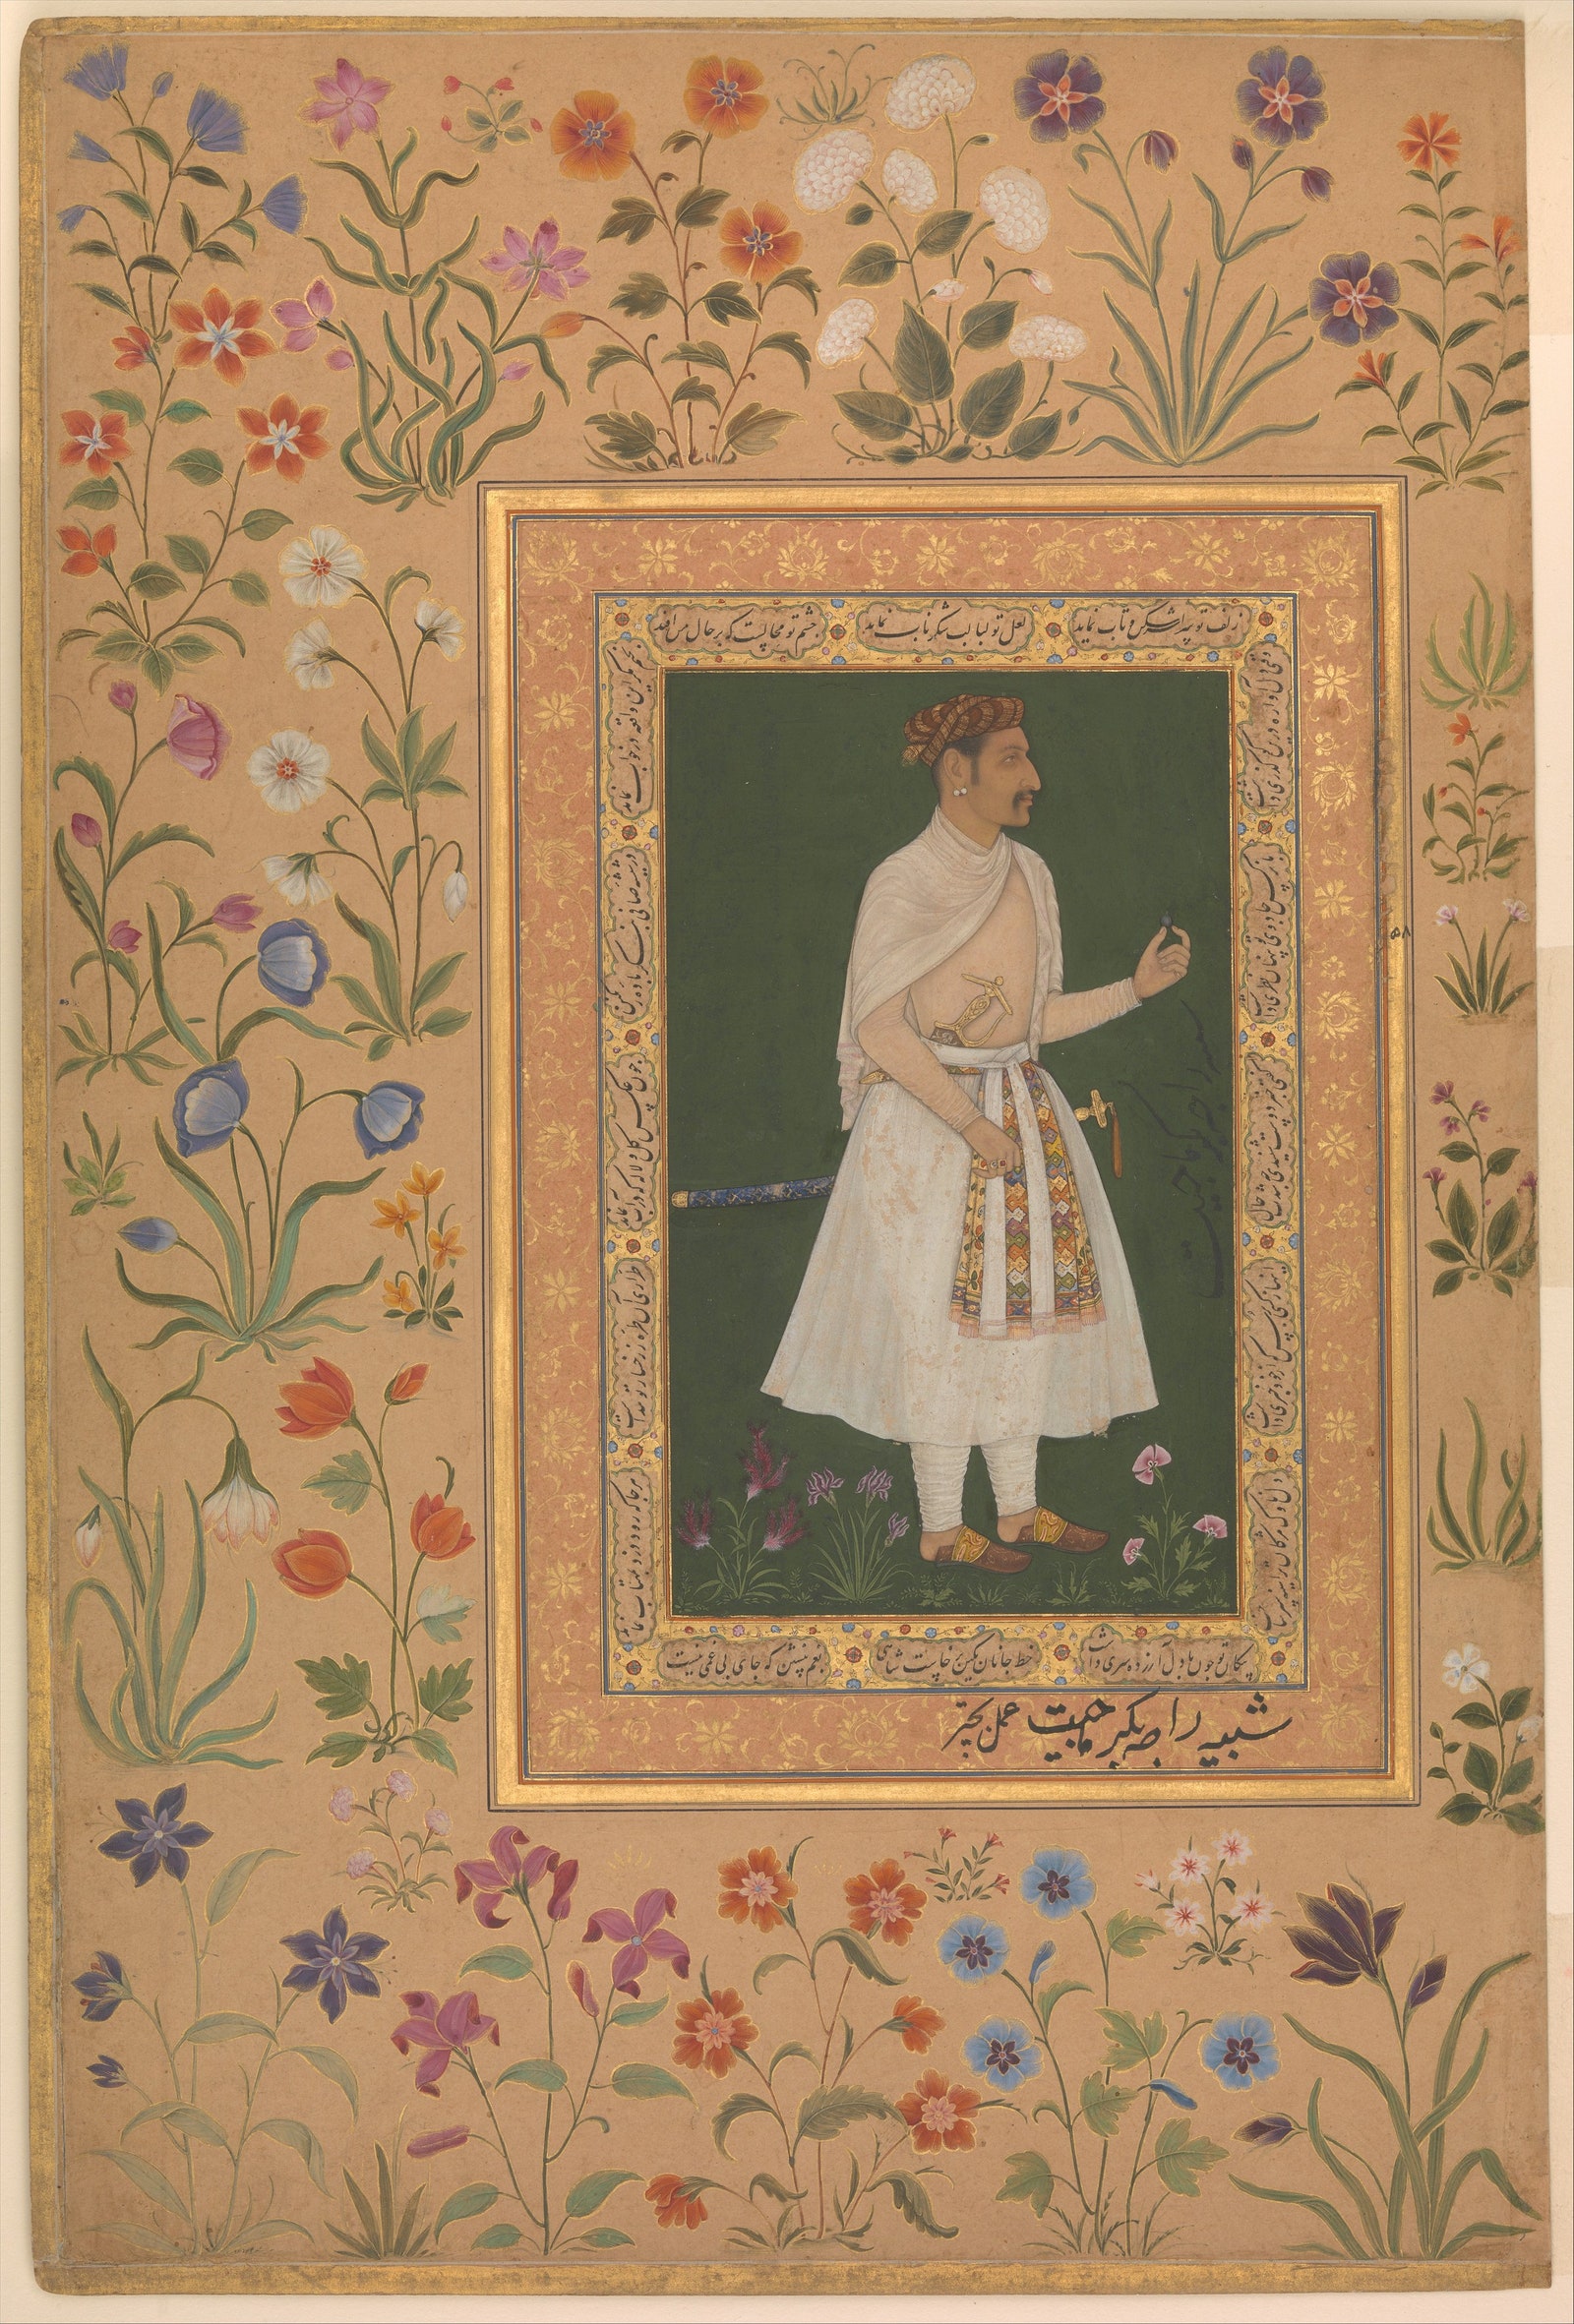 A painting by Bichitr titled ‘Portrait of Raja Bikramajit